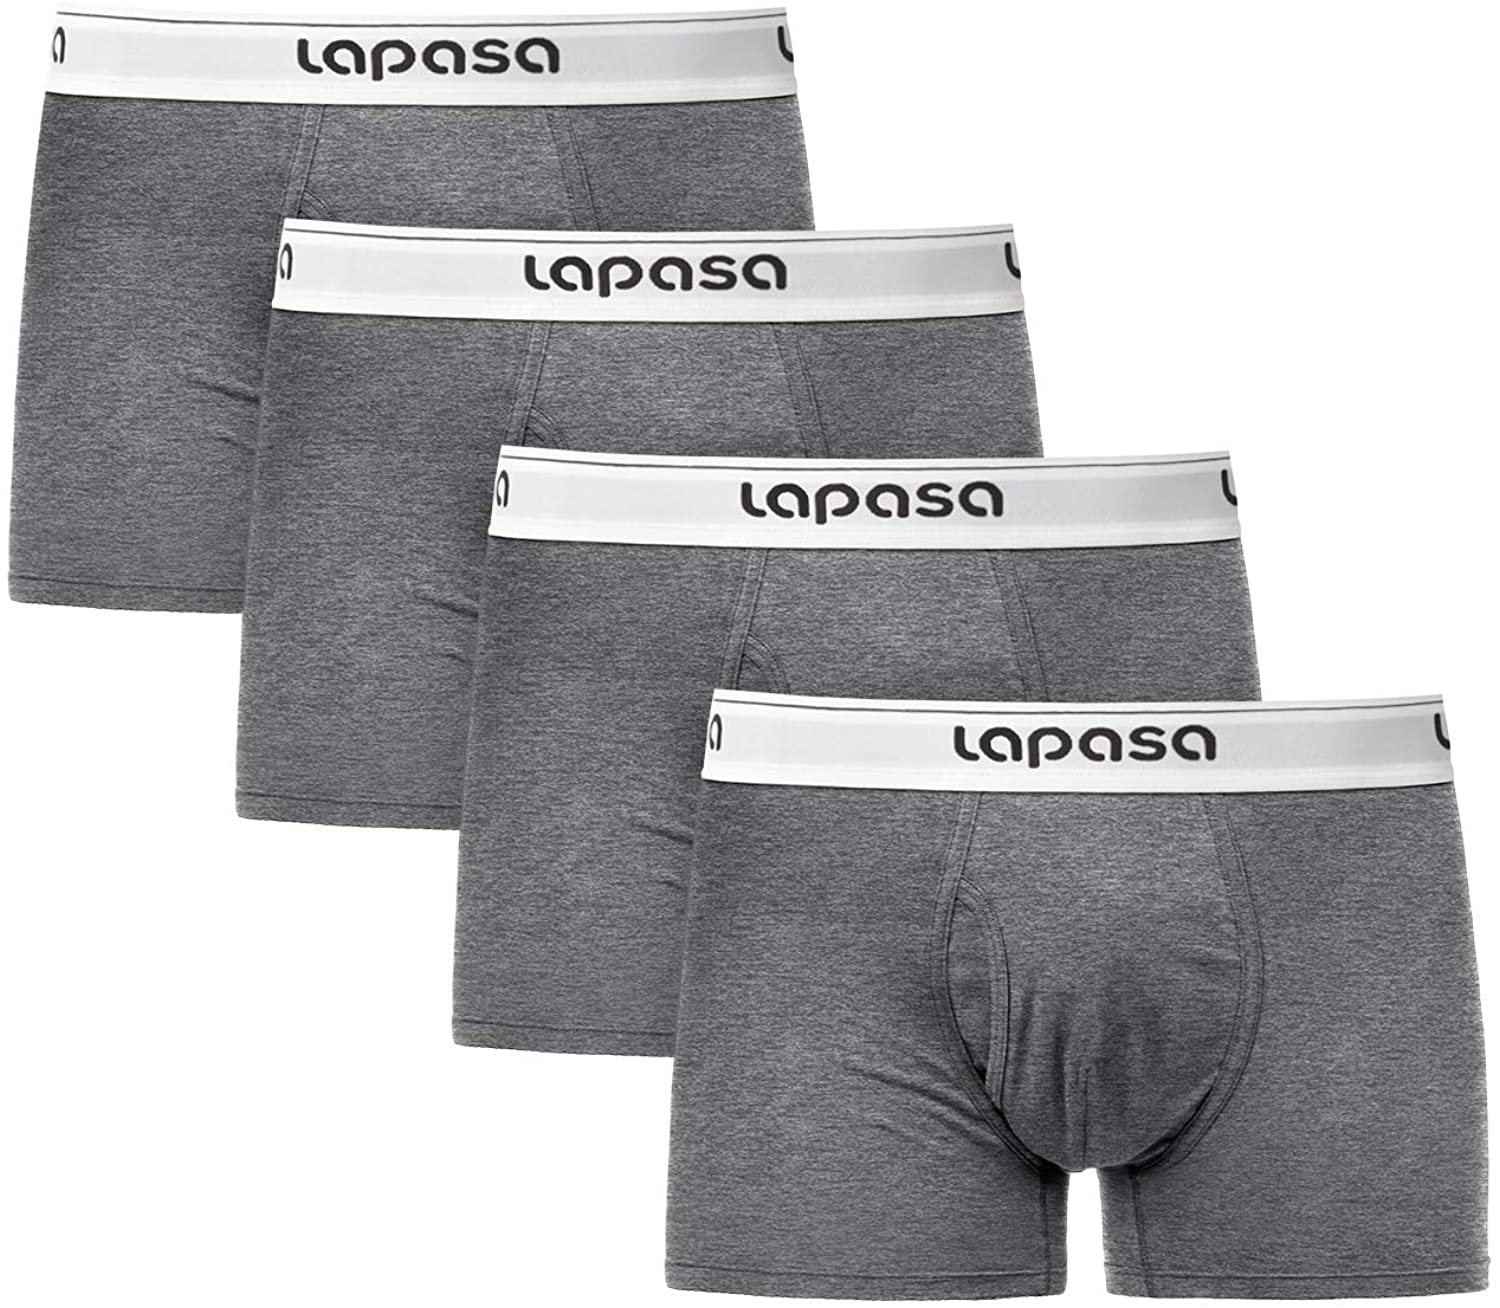 LAPASA Men's Boxer Briefs 4-Pack Cotton Stretch Underwear with Fly